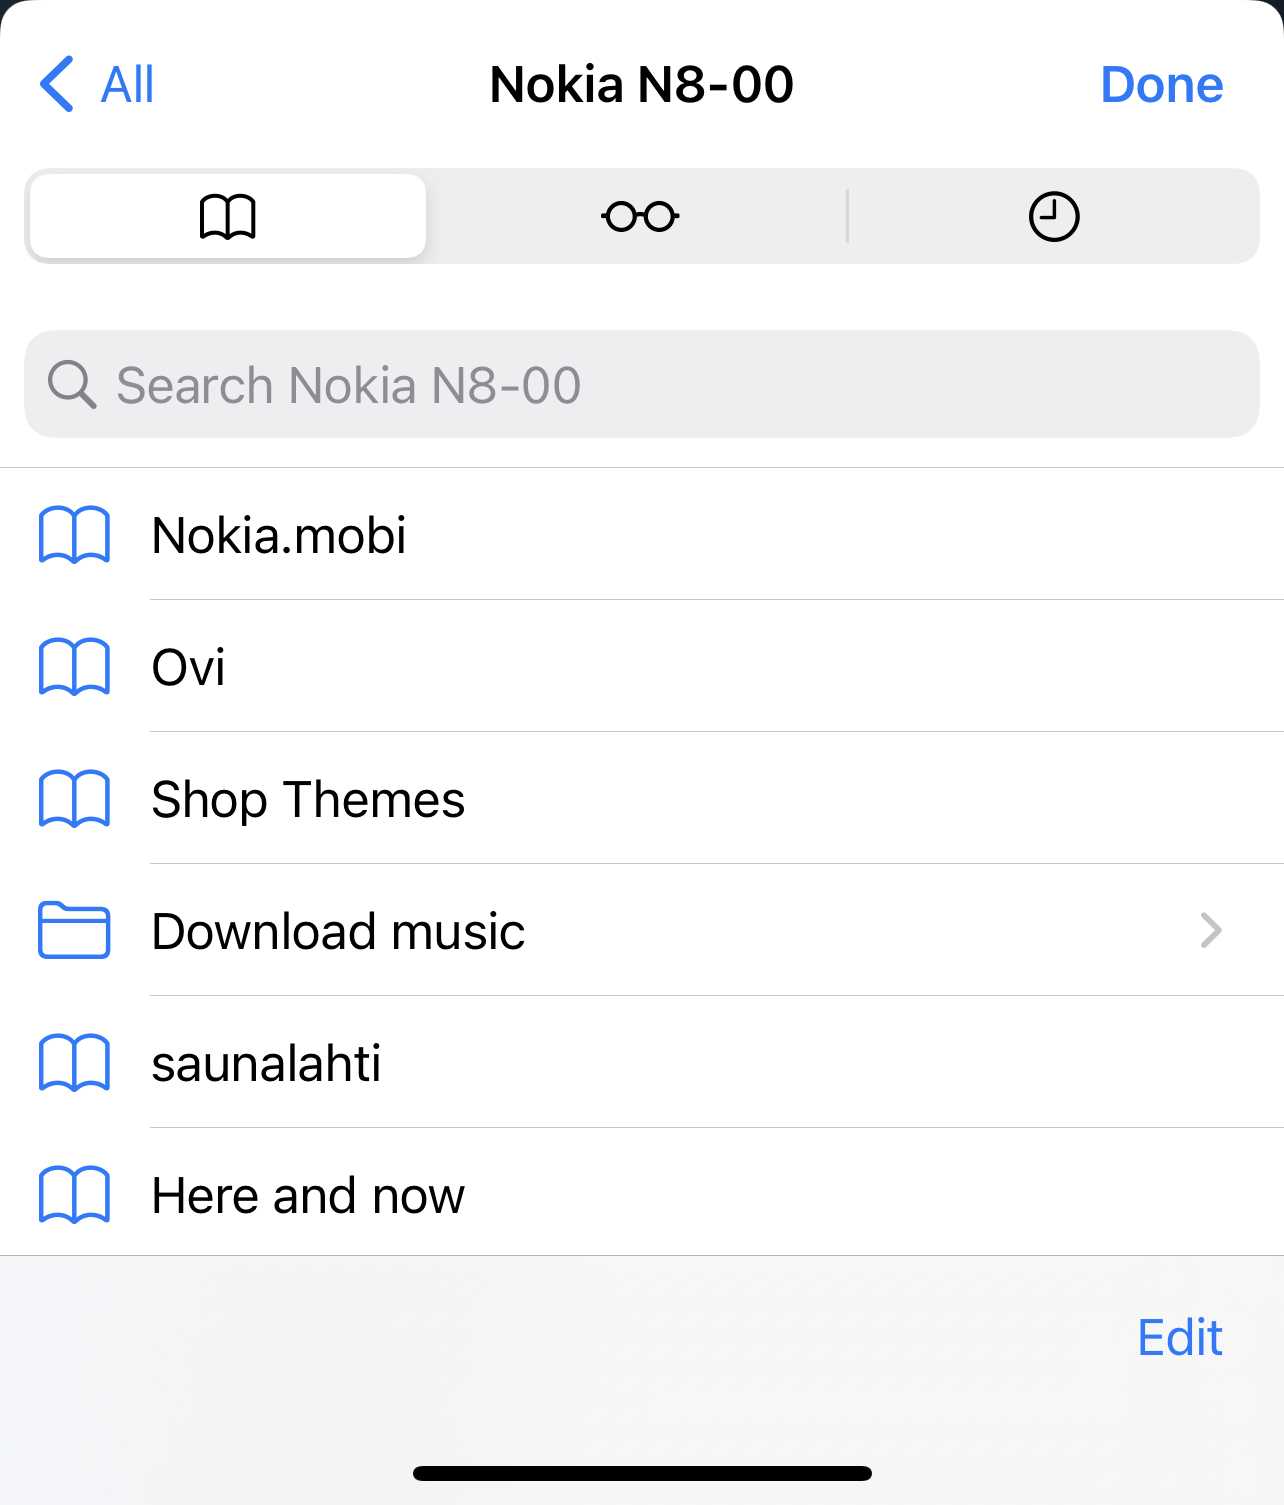 iphone bookmars folder labeled N8-00 having bookmarks of Noki properties from 2009